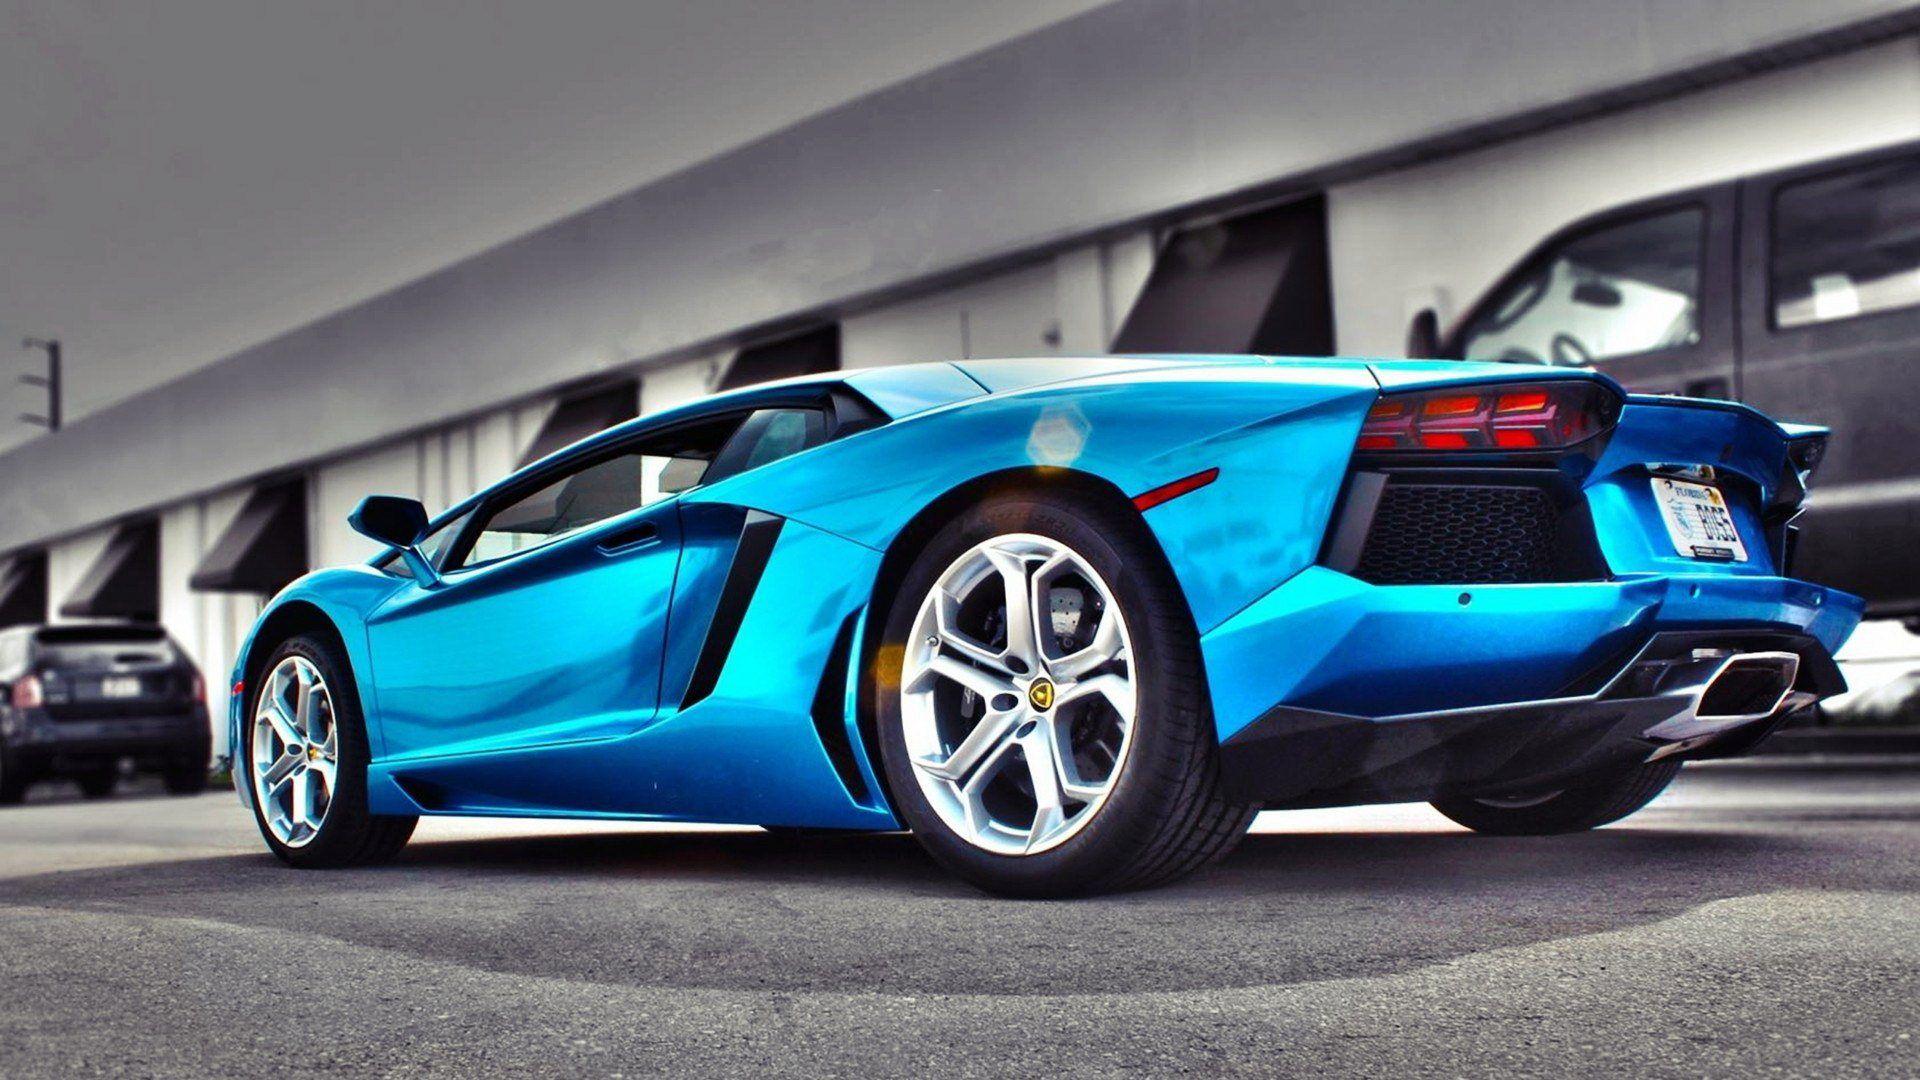 Lamborghini Aventador Blue Wallpaper Hd 1920x1080